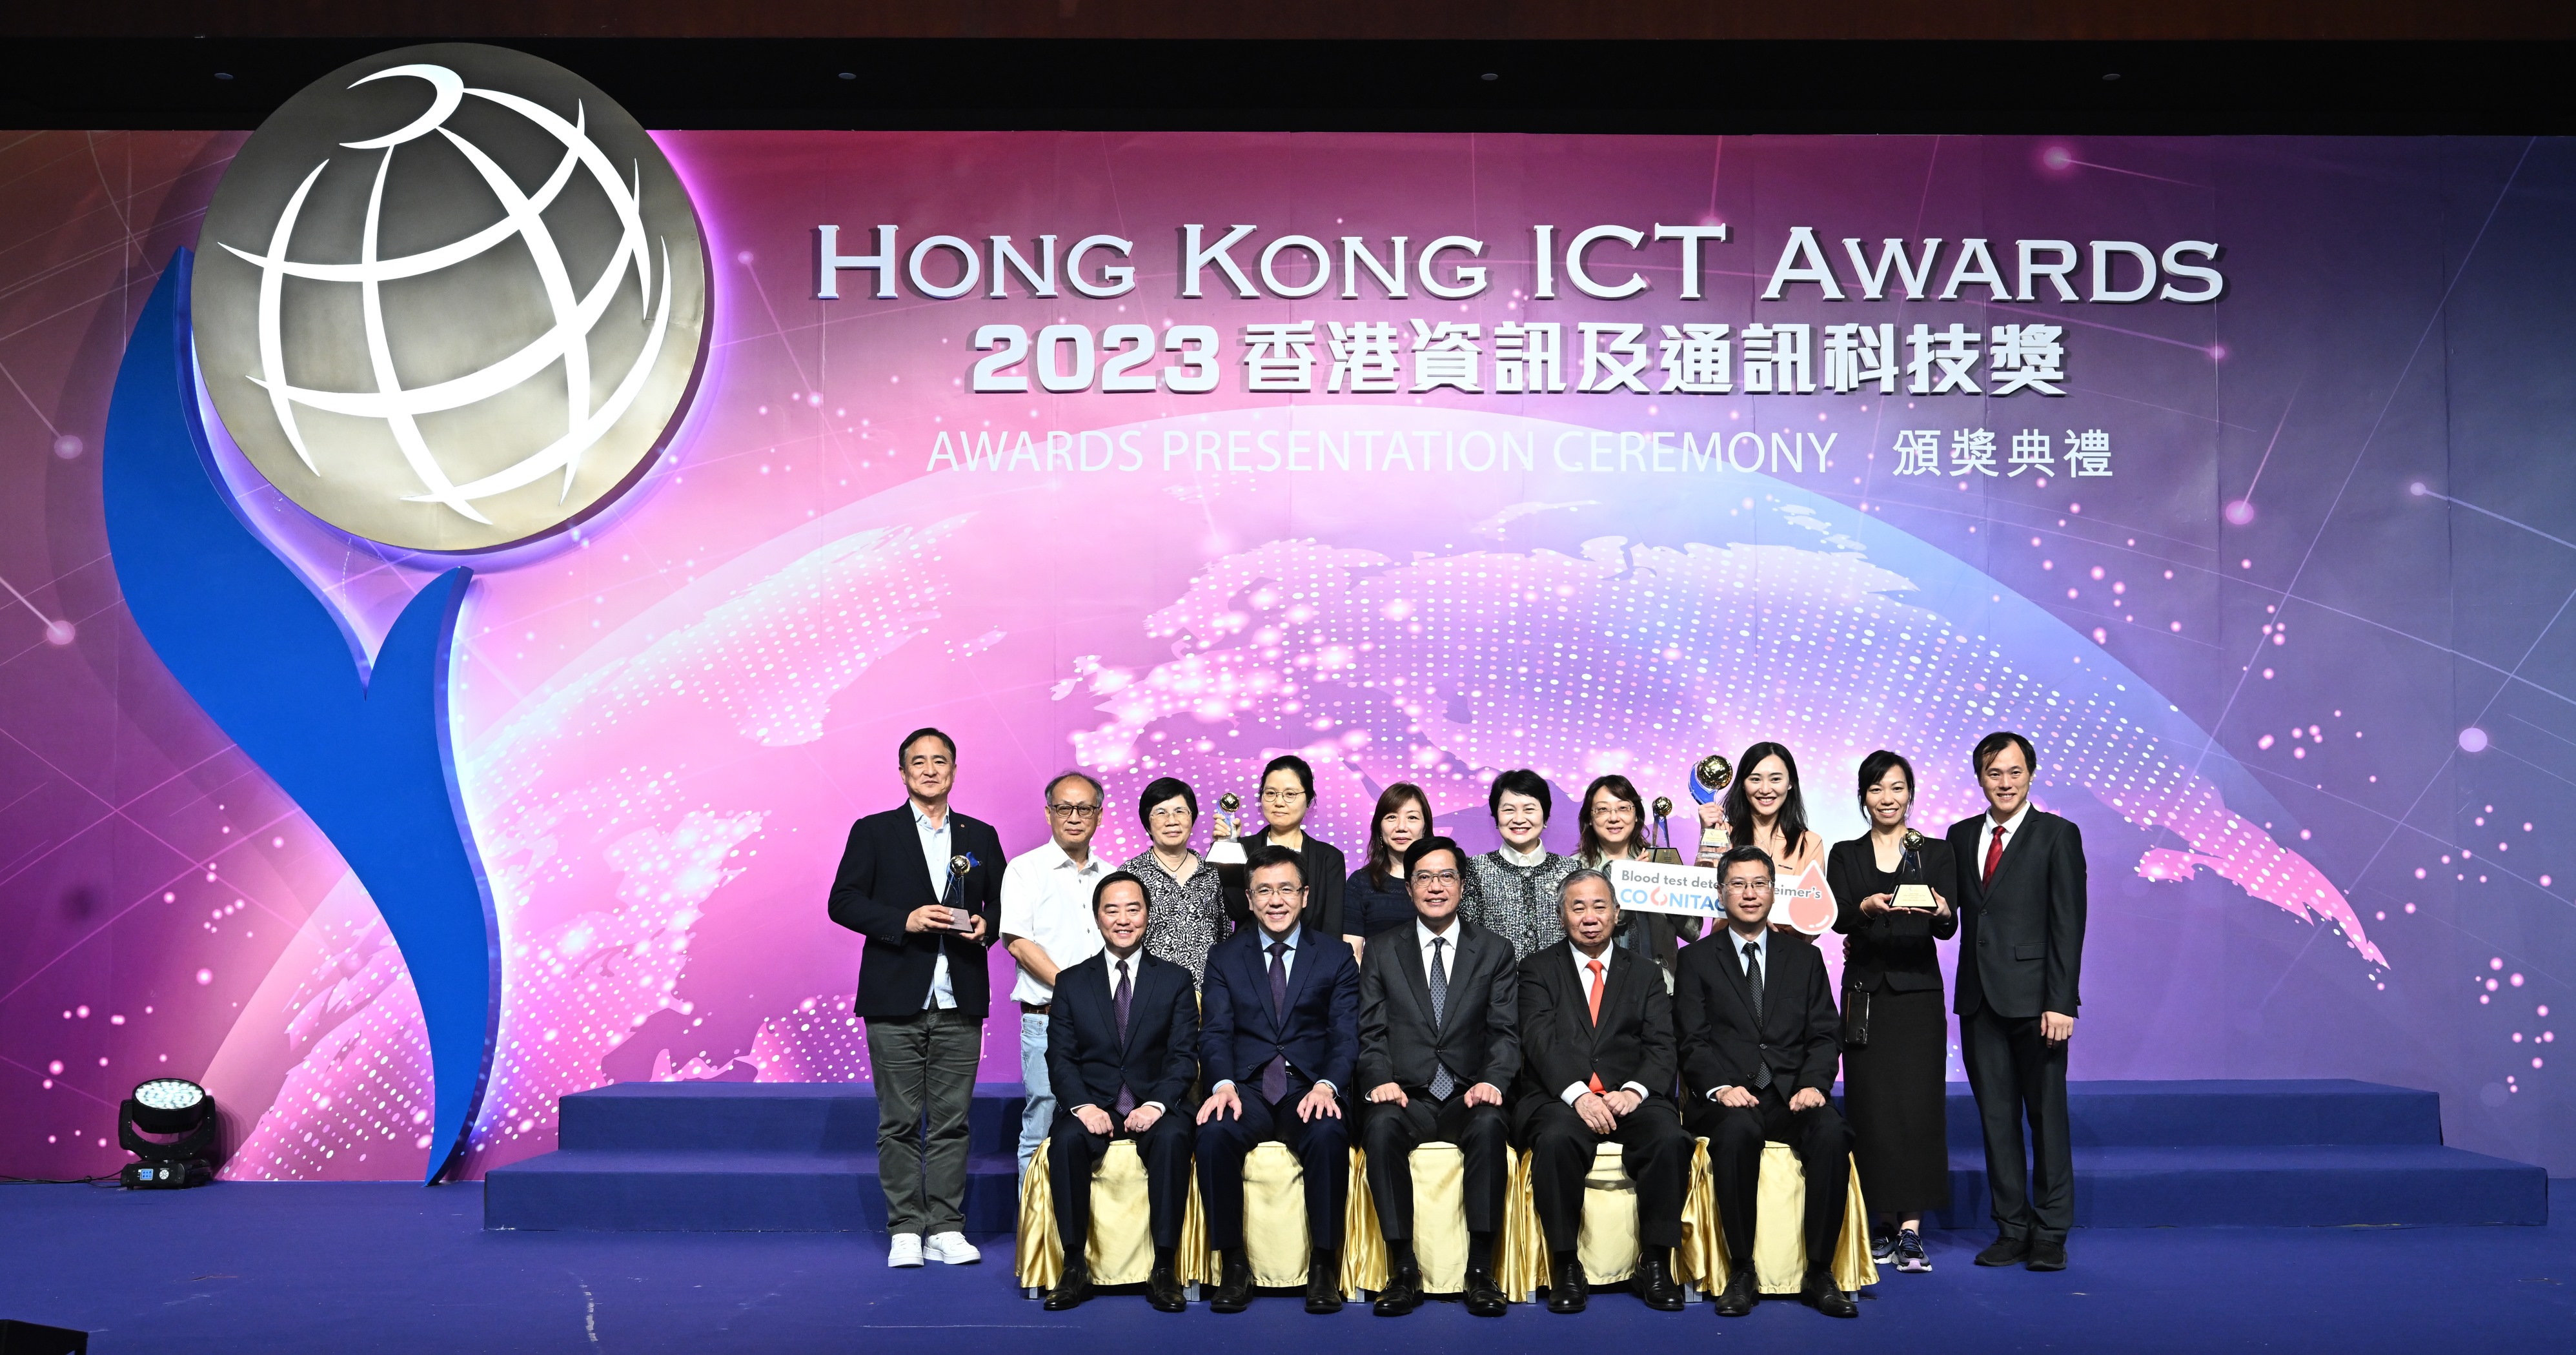 Hong Kong ICT Awards 2023 Smart People Award Winners Group Photo